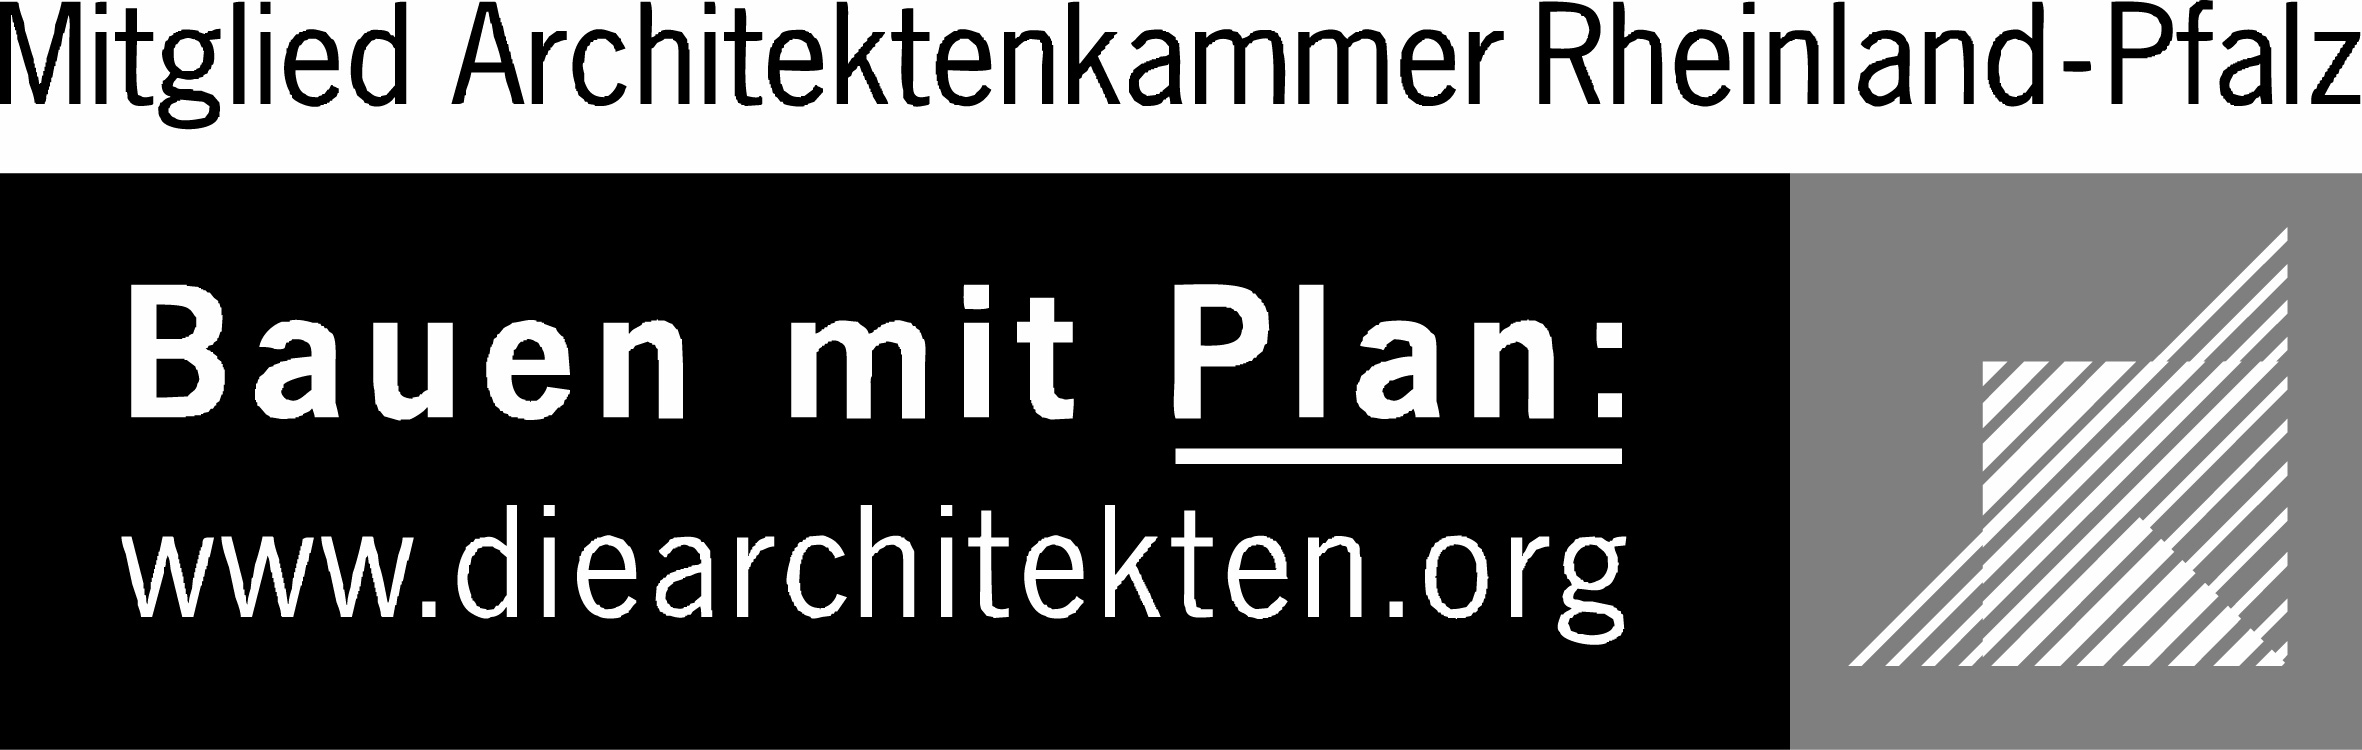 Mitglied Architektenkammer Rheinland-Pfalz